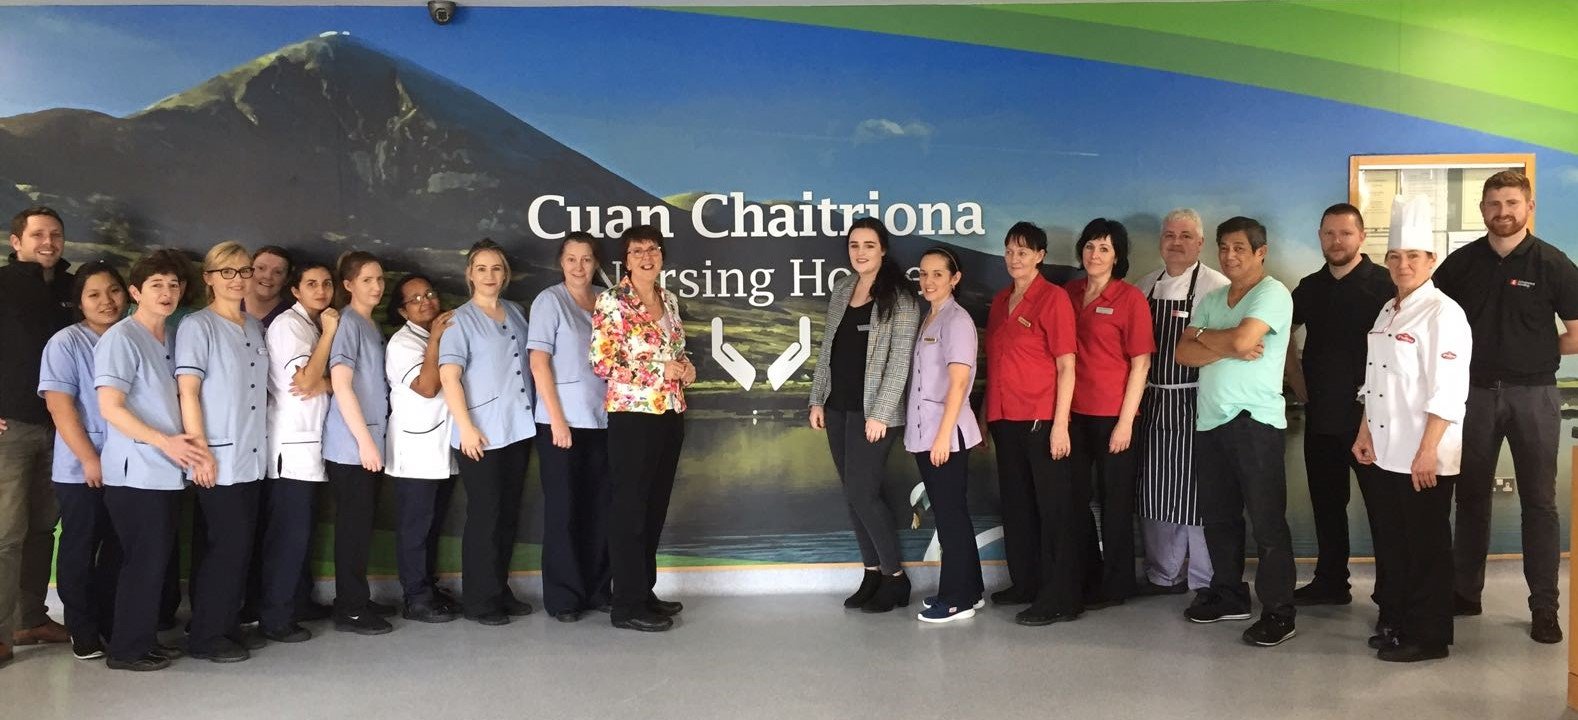 Cuan Chaitriona Staff Group Photo-1